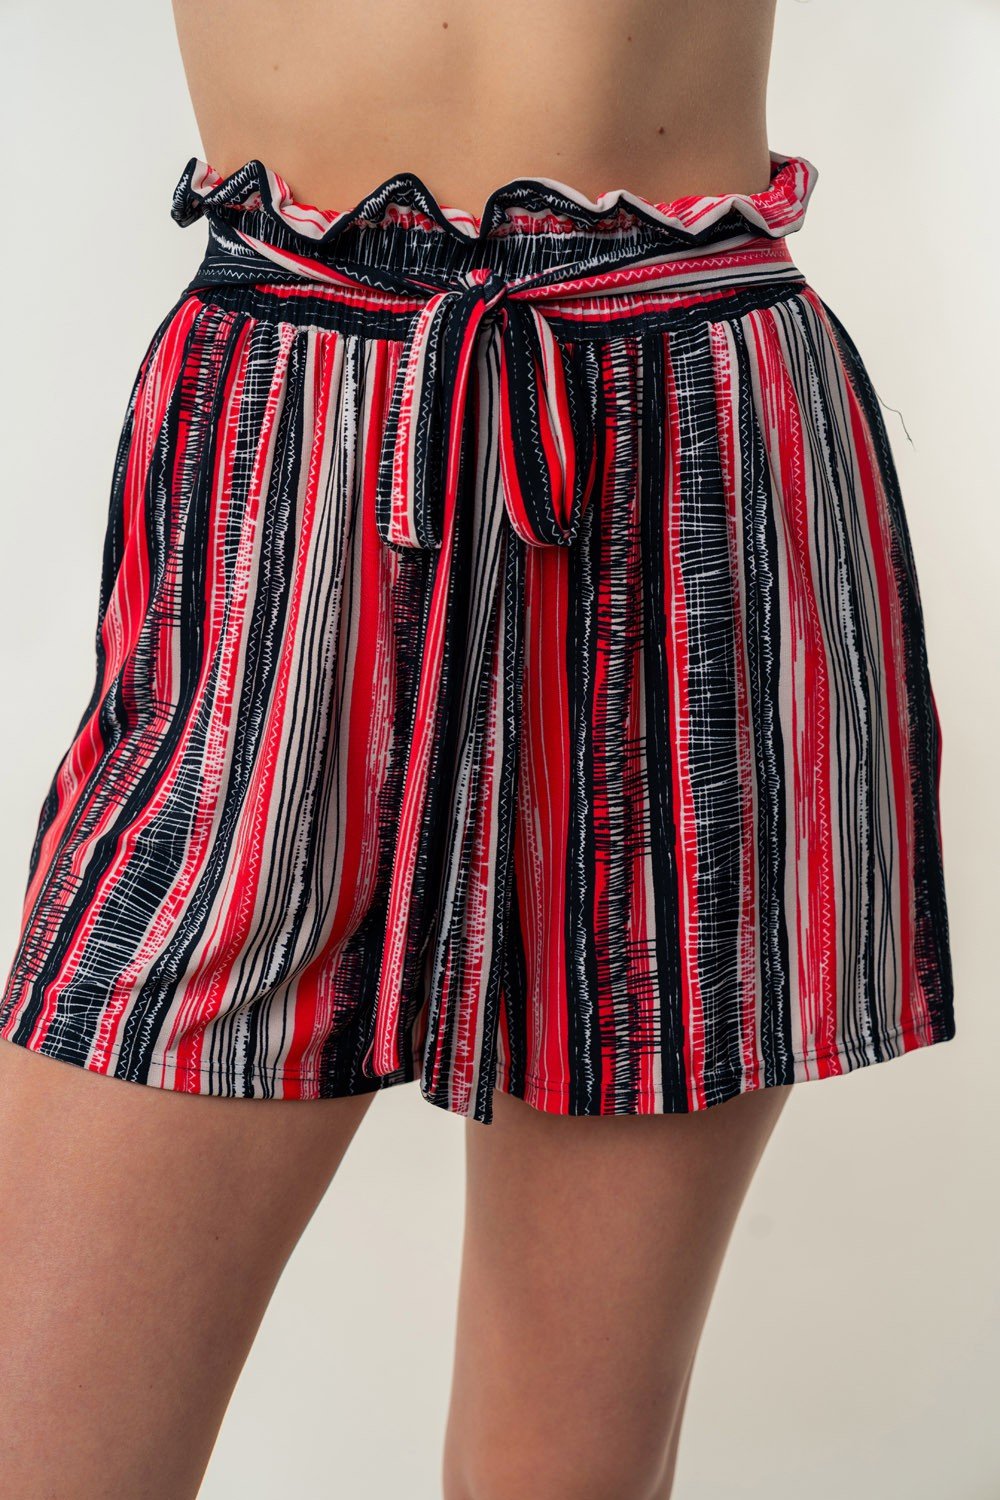 High Waisted Striped Shorts in Red/BlackShortsWhite Birch